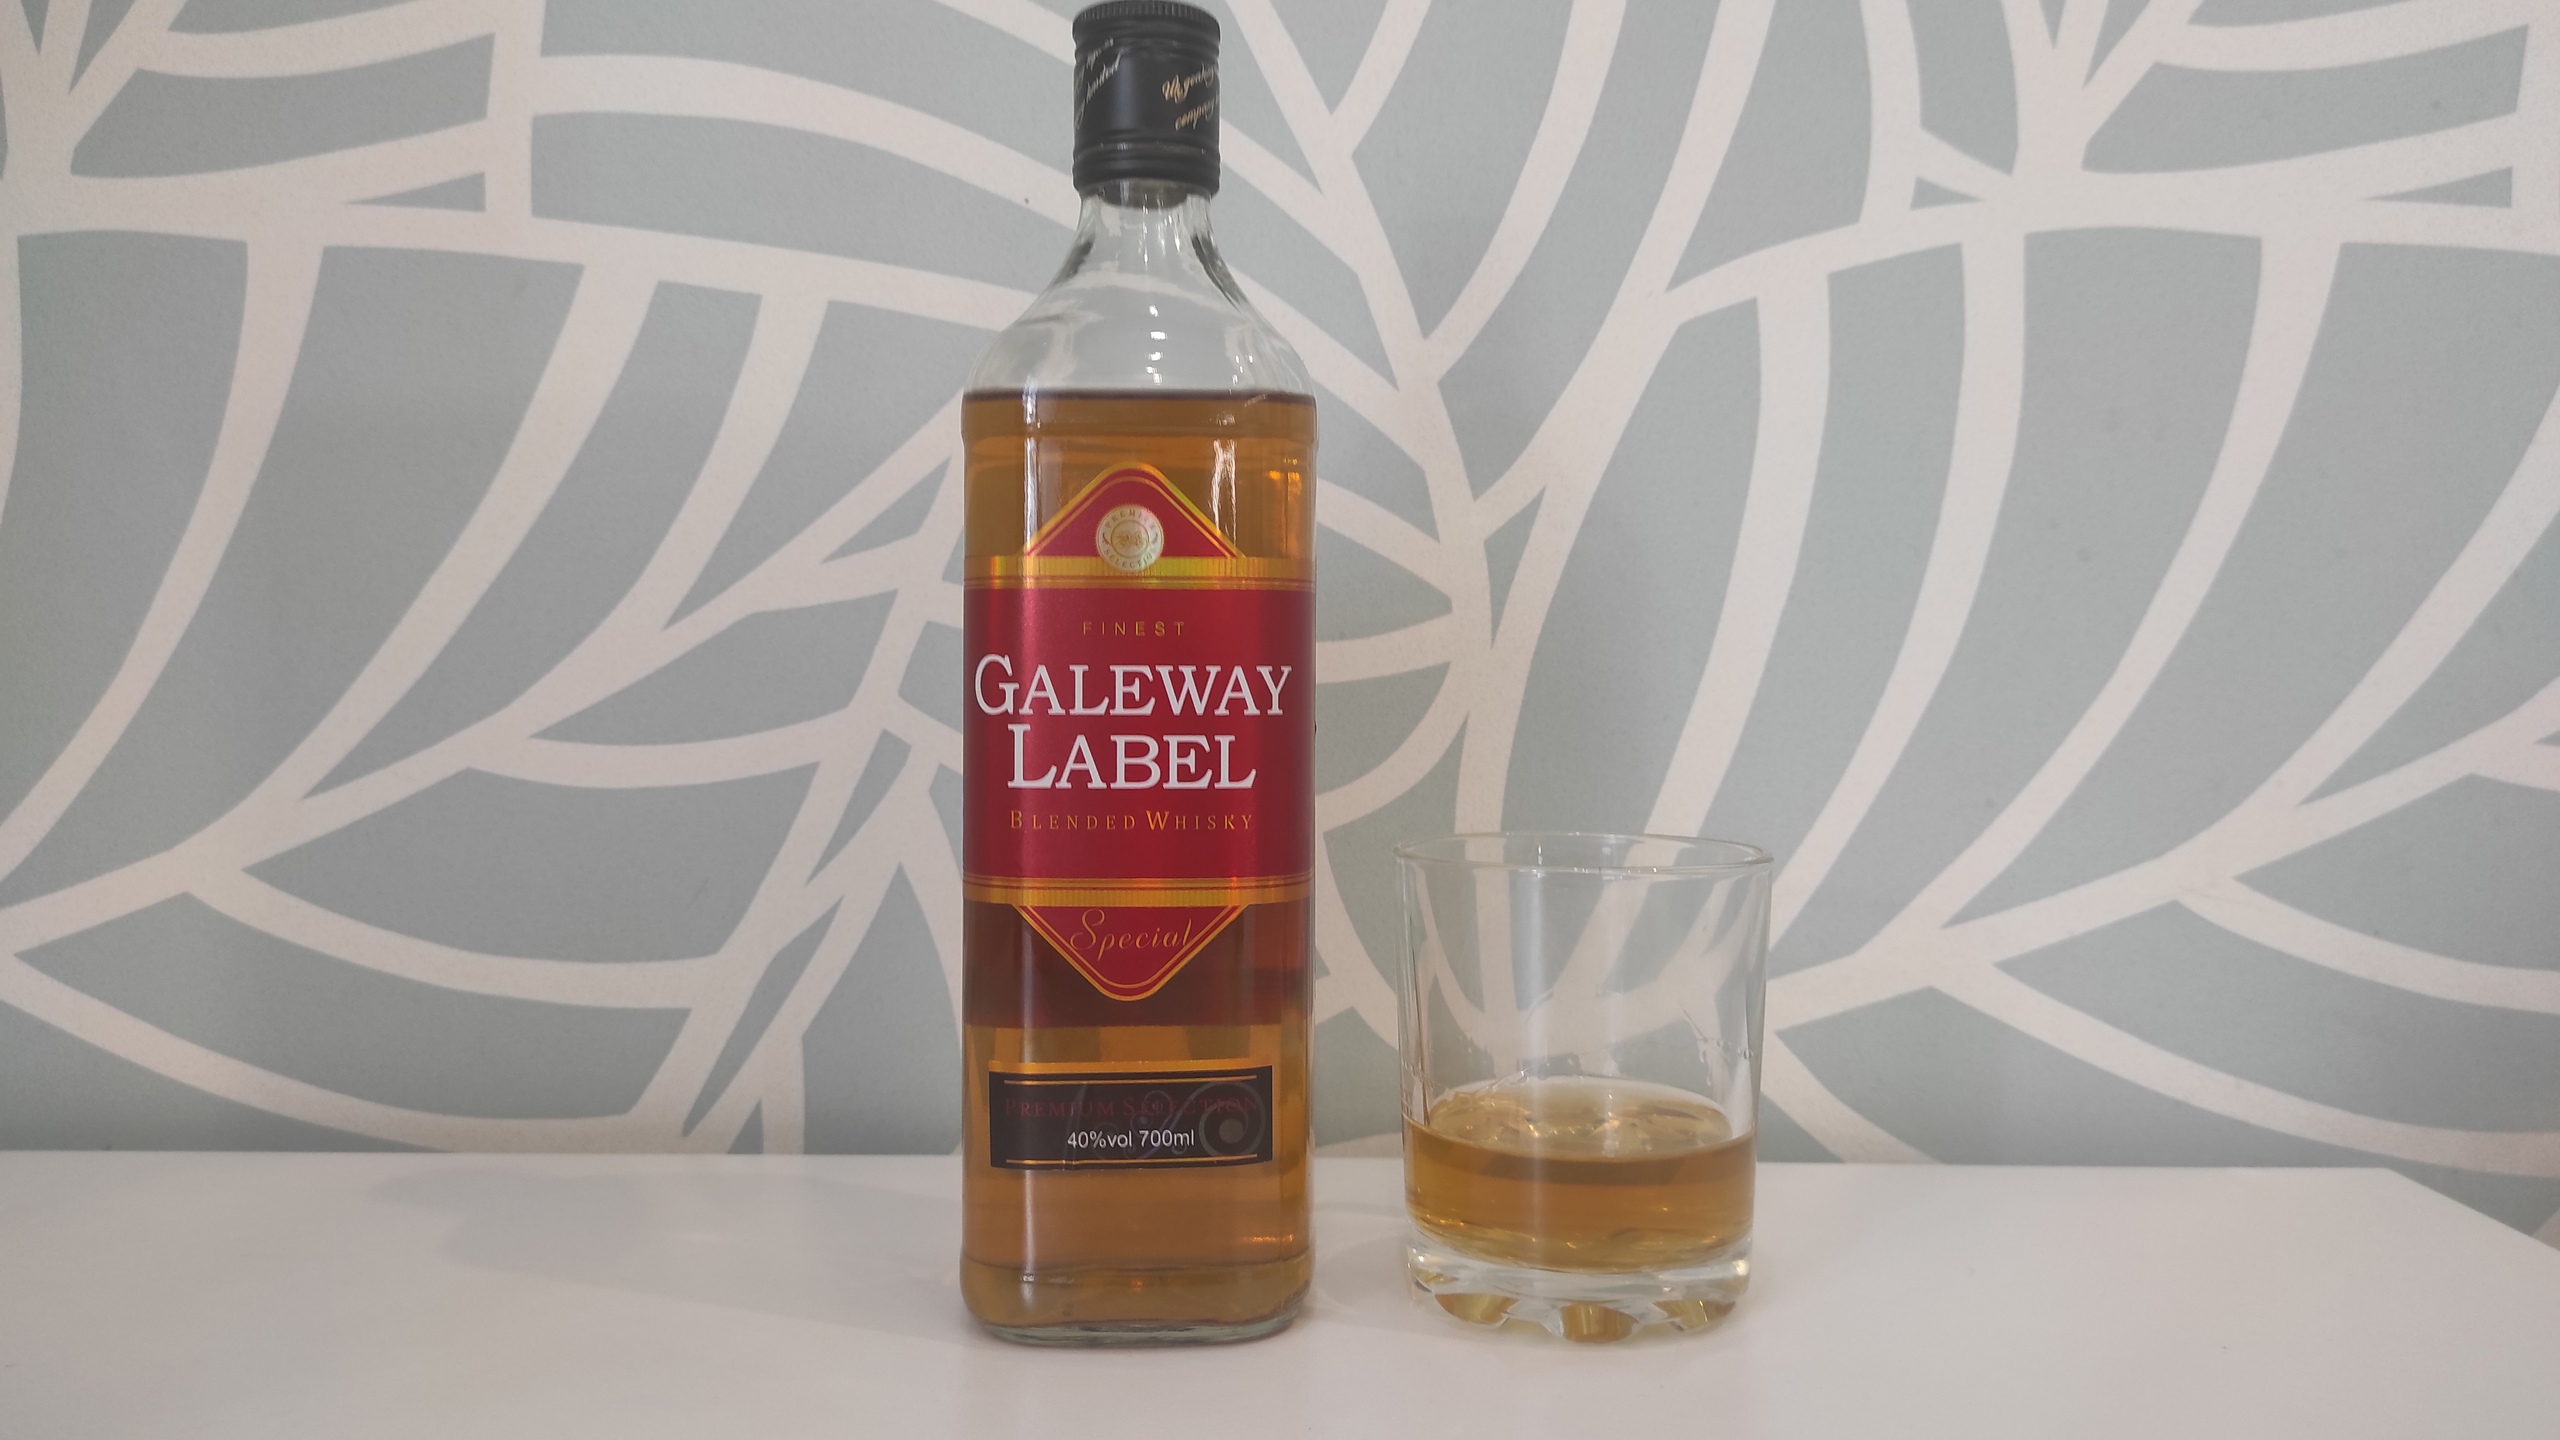 Виски royal glenvart 0.7. Китайский виски. Galeway Label. Китайский виски Джон Винтон. Виски би.